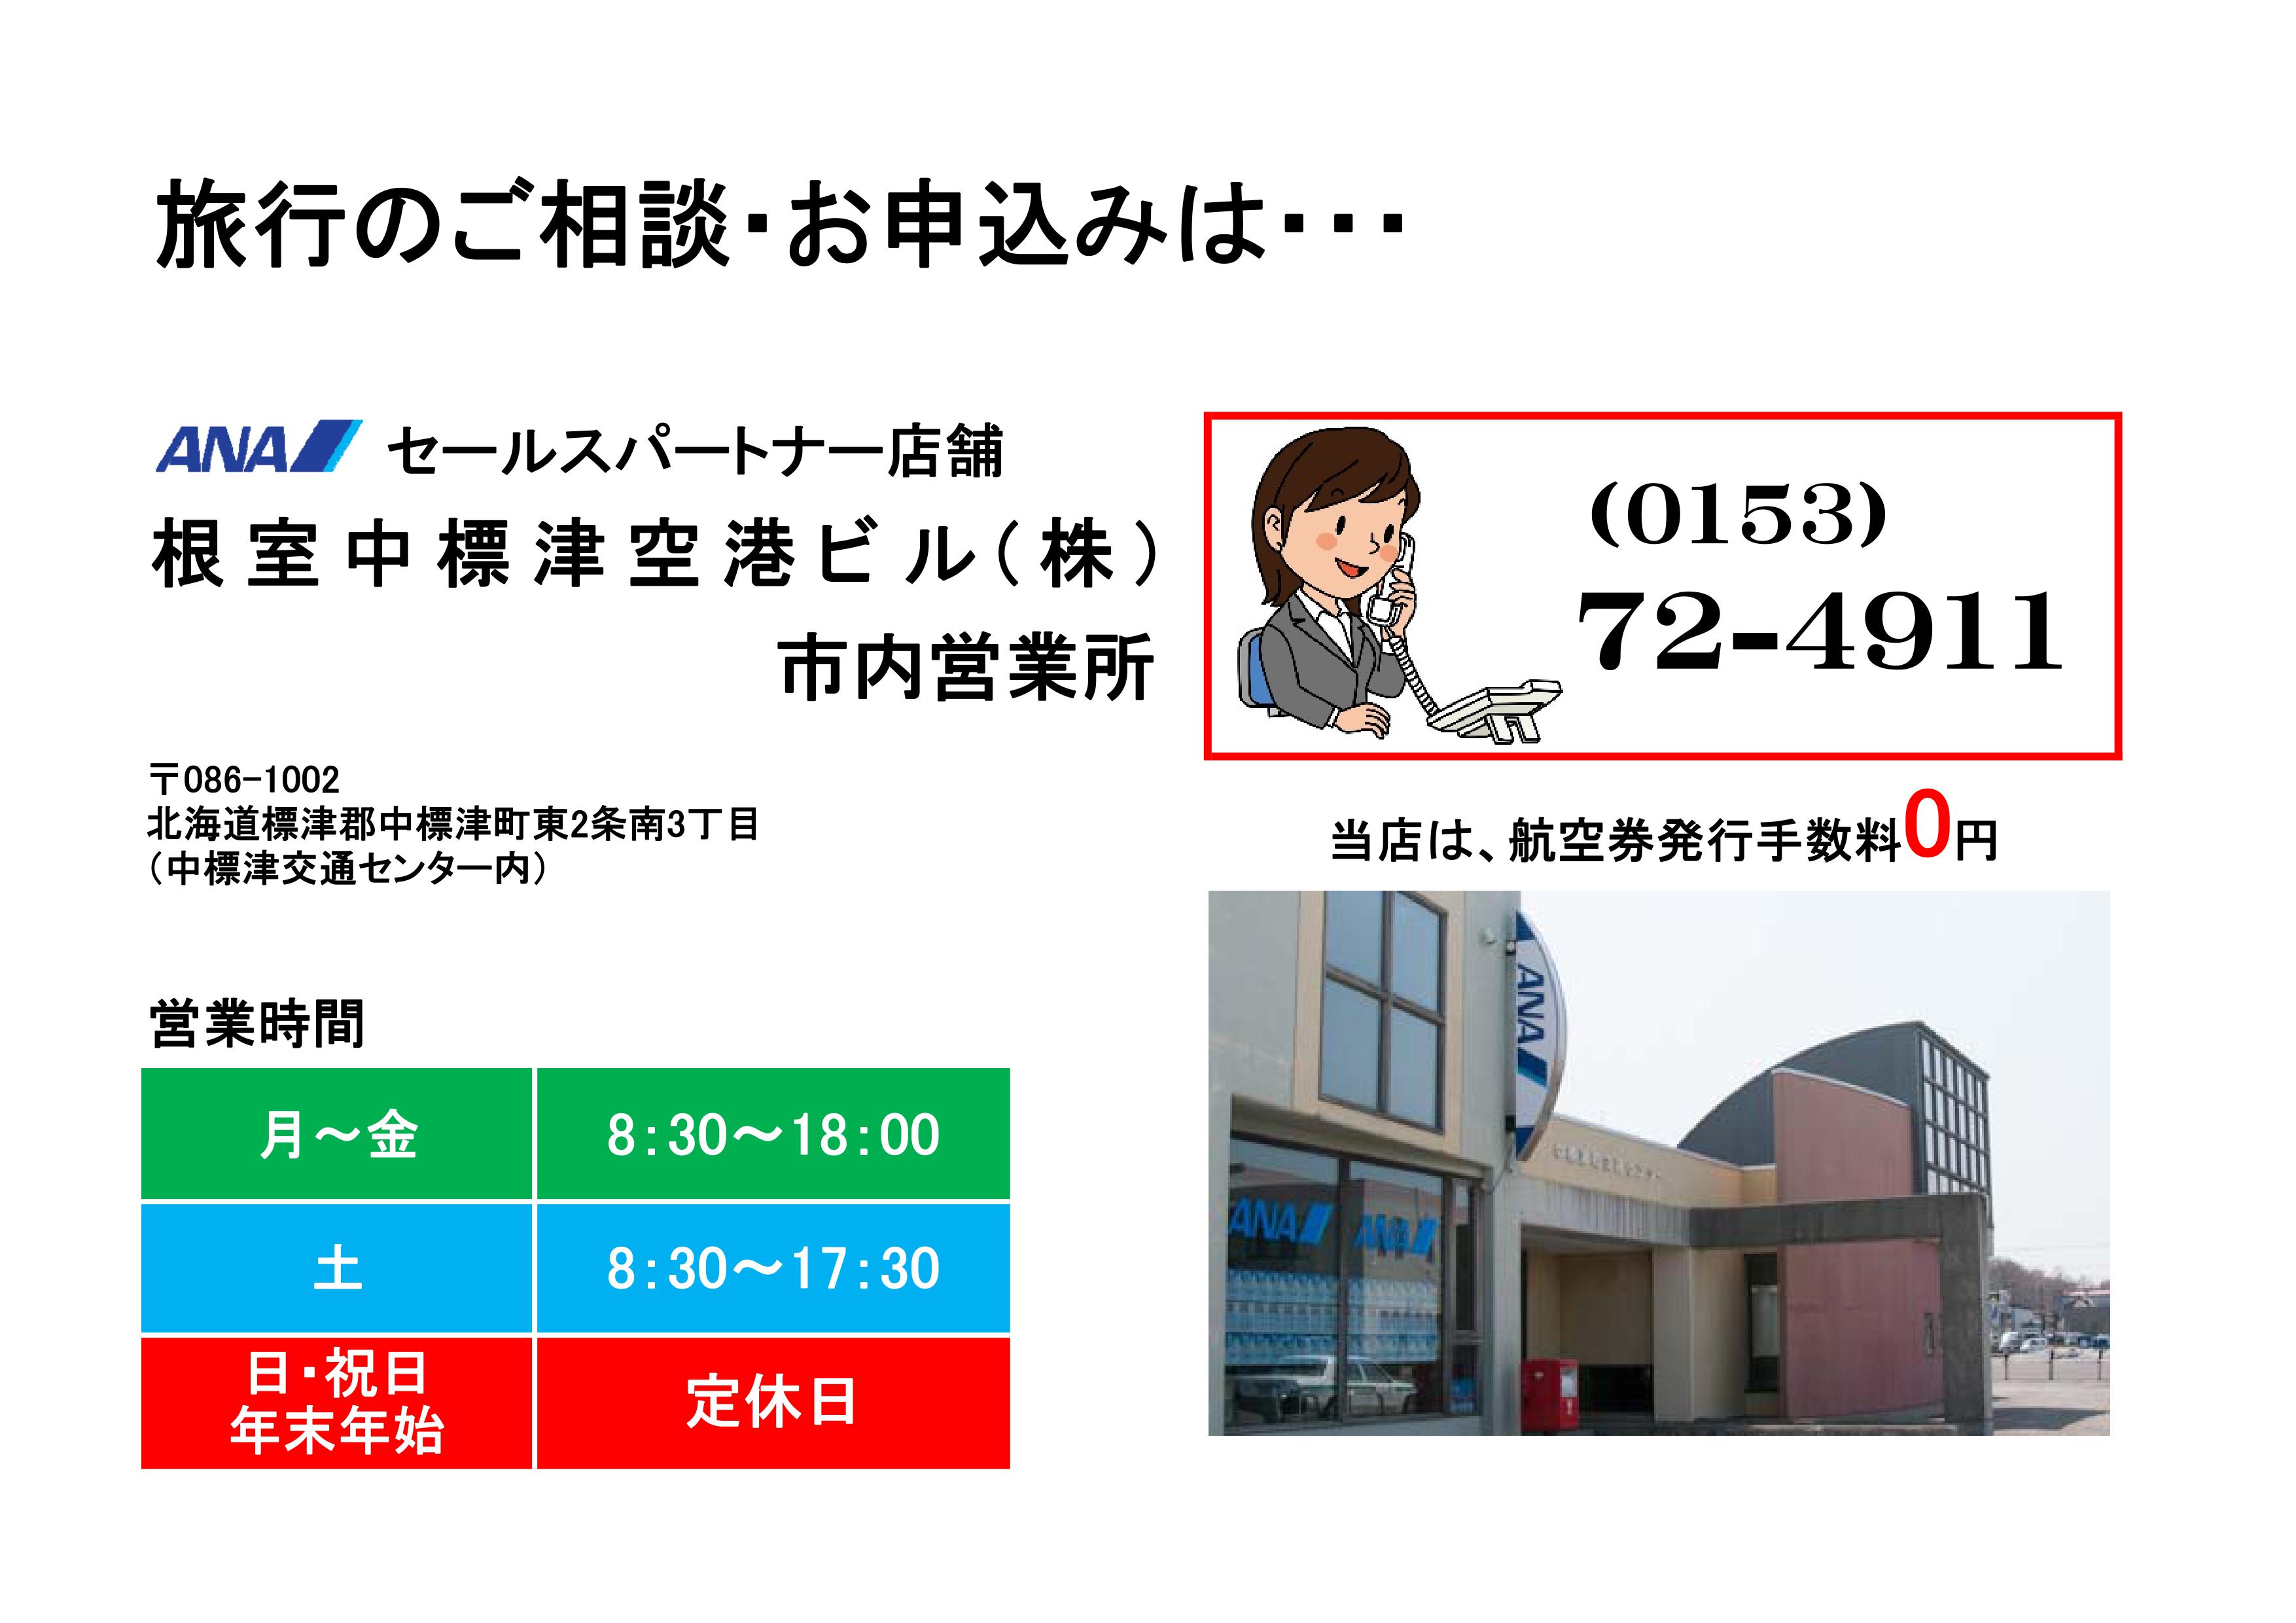 http://www.nakashibetsu-airport.jp/%E5%96%B6%E6%A5%AD%E6%99%82%E9%96%93.jpg